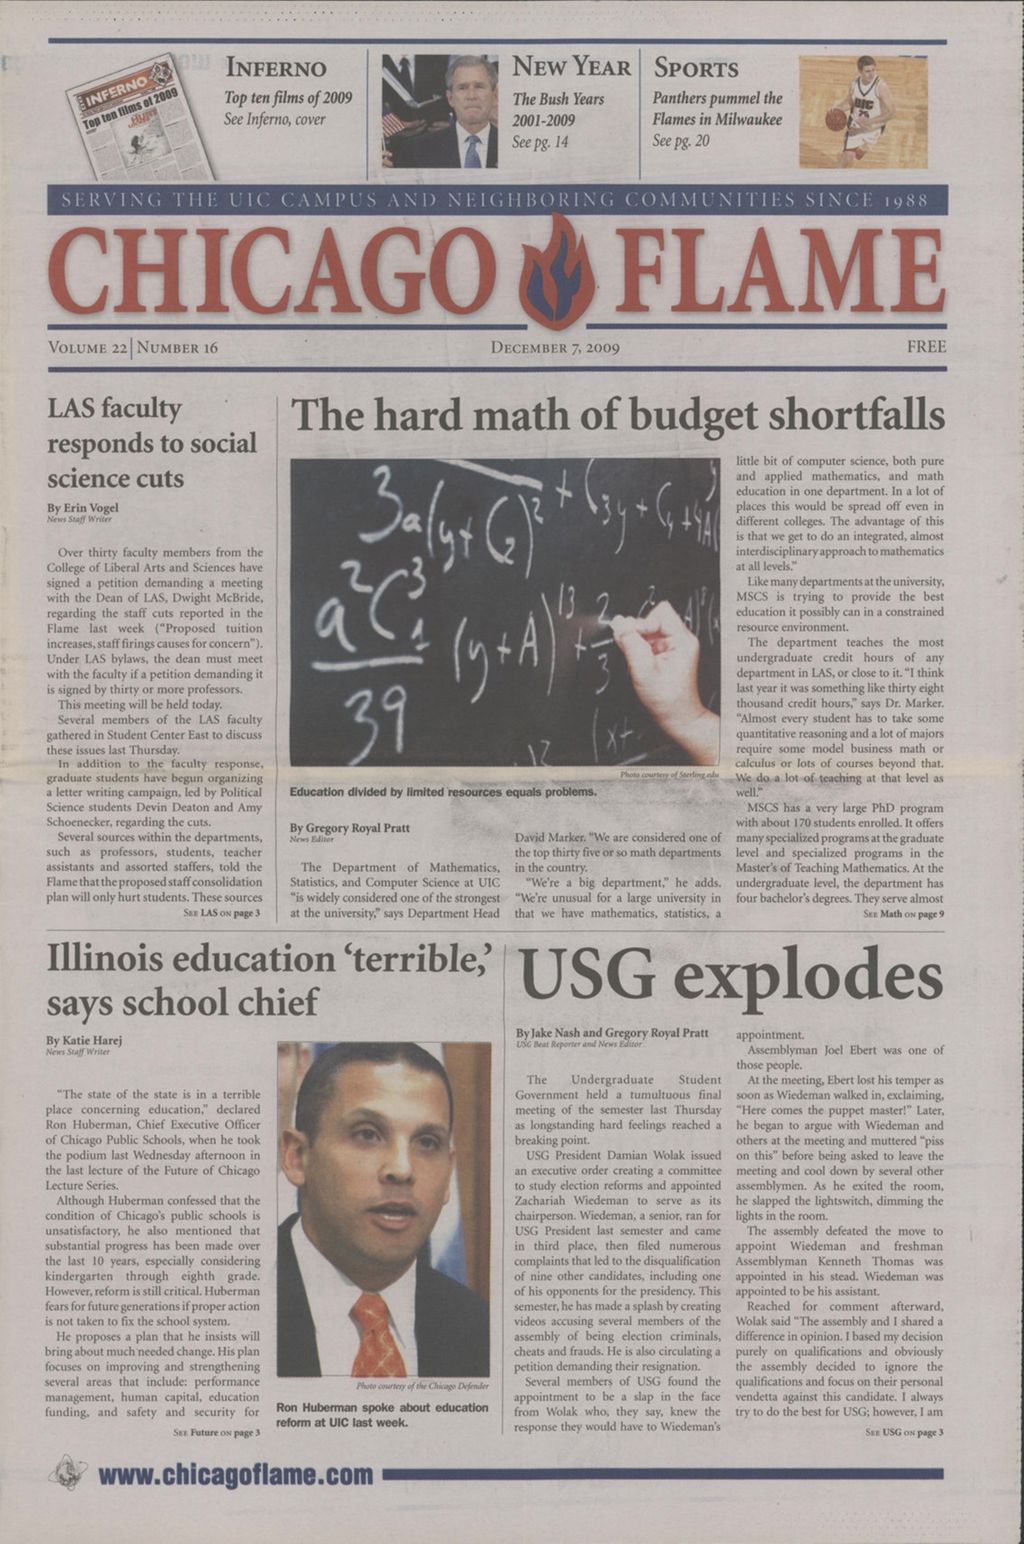 Chicago Flame (December 7, 2009)